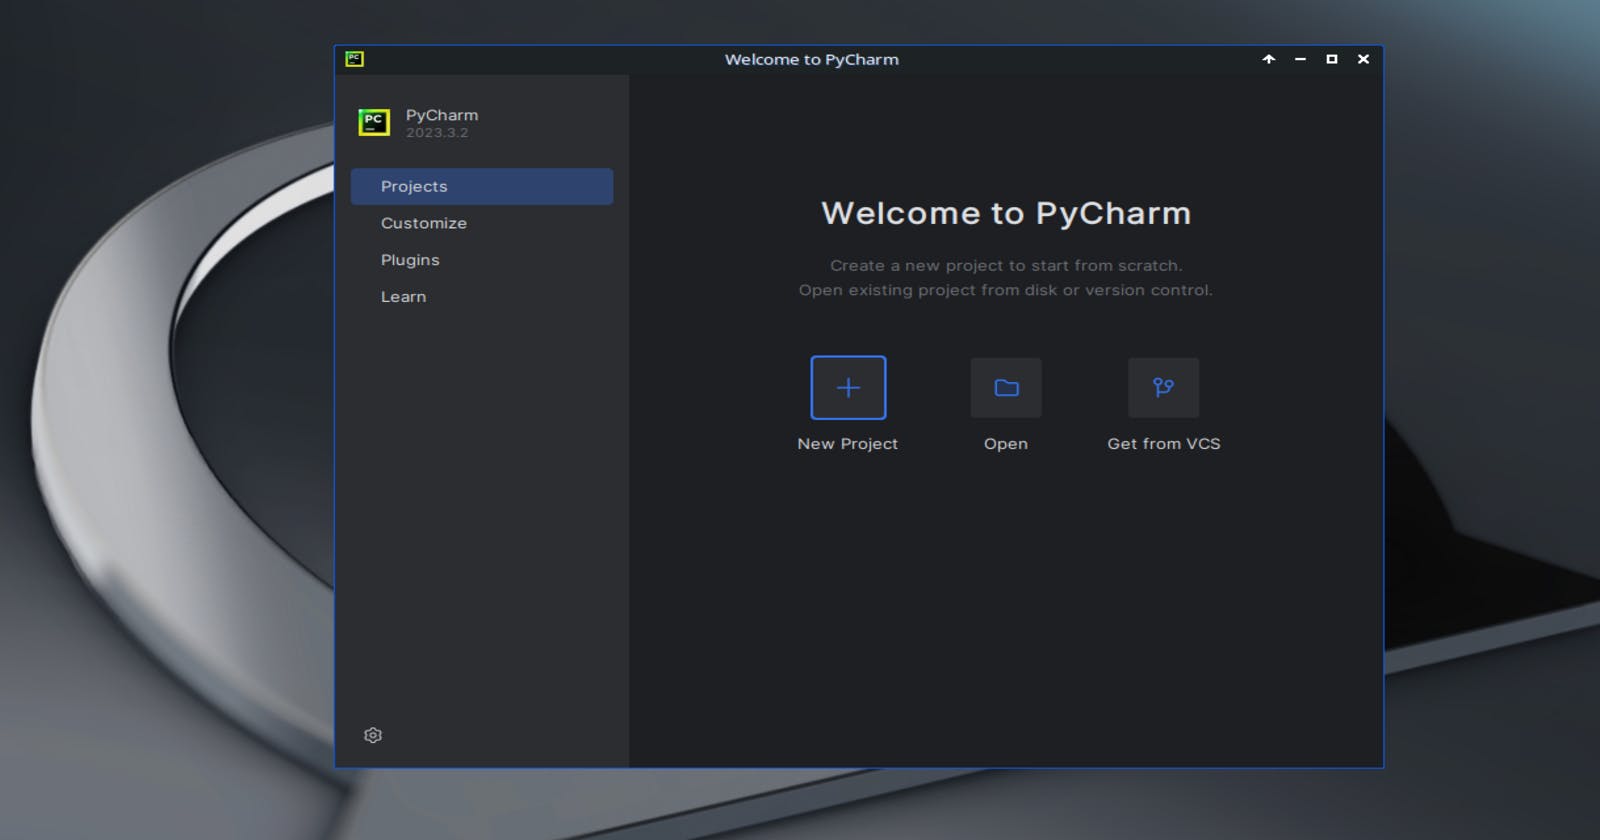 Installing Pycharm on Linux